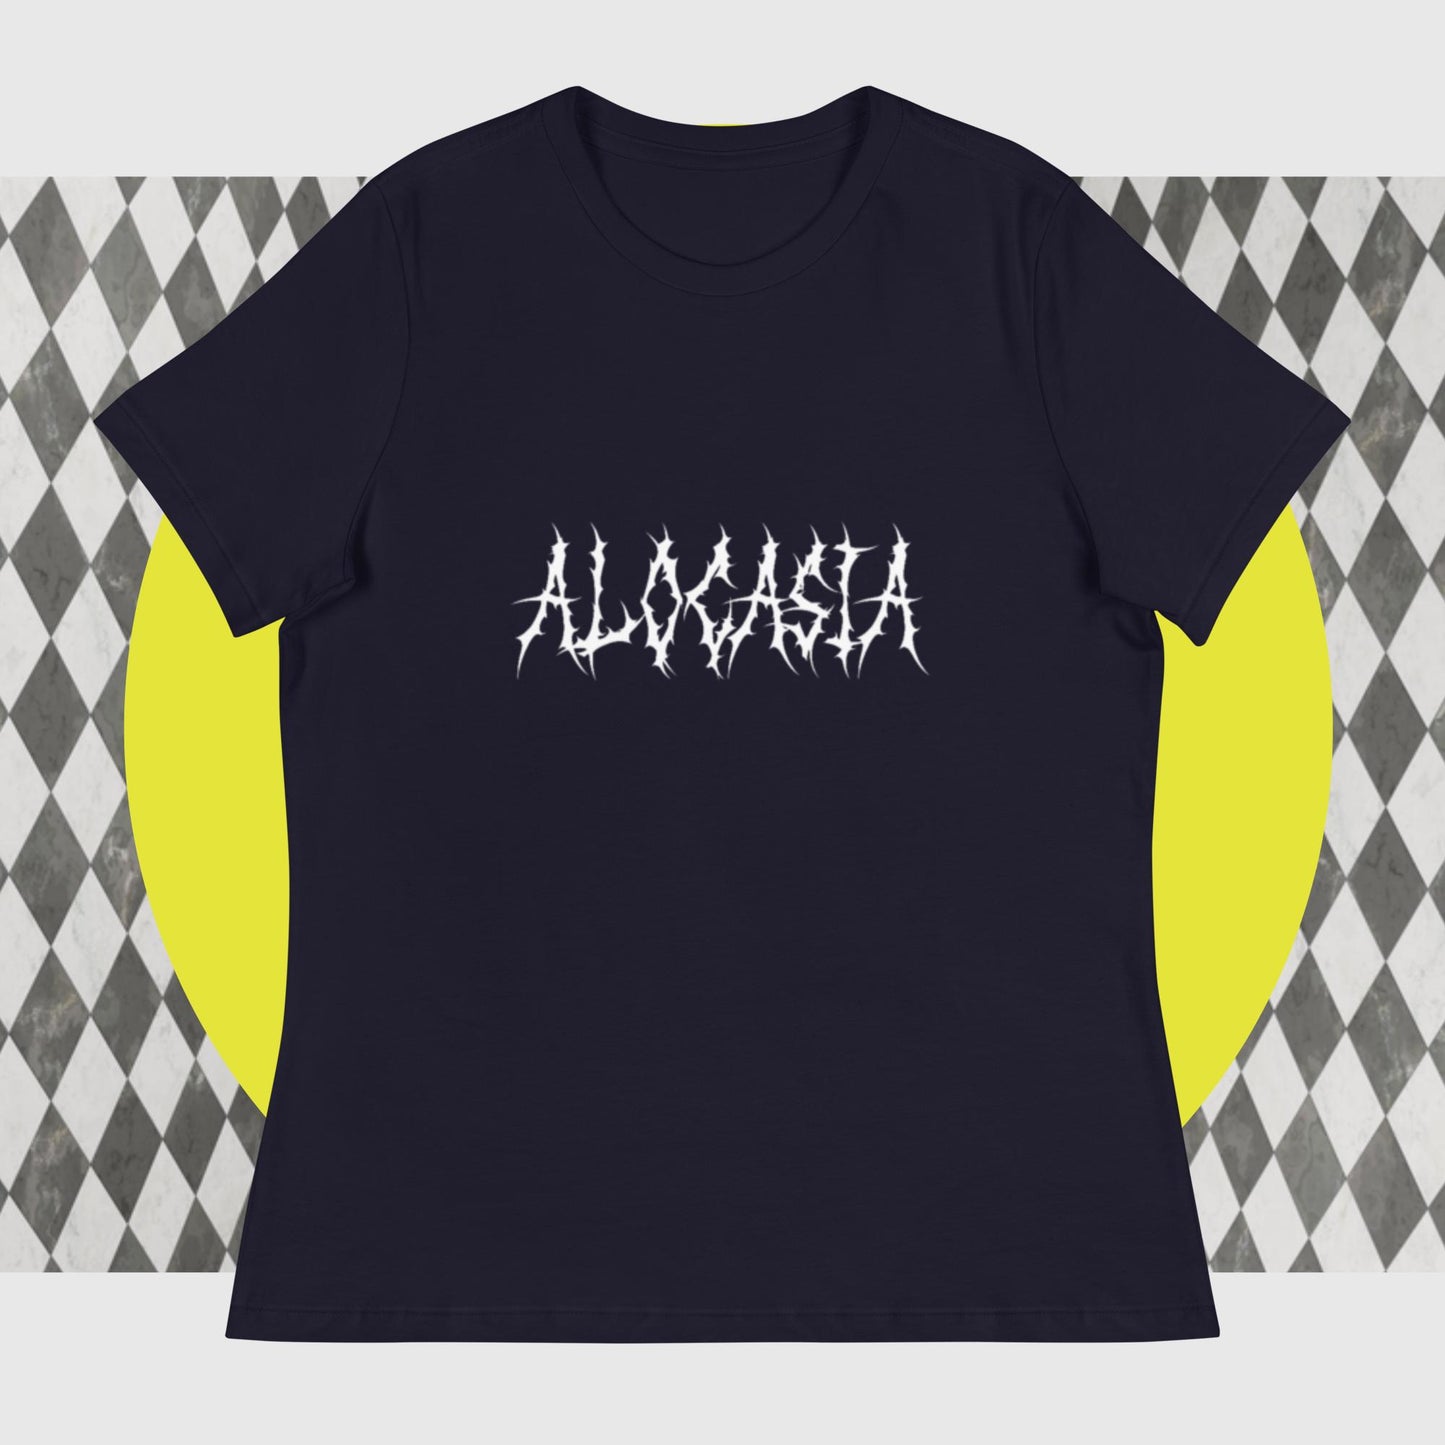 Women's Relaxed T-Shirt - Alocasia Death Metal logo